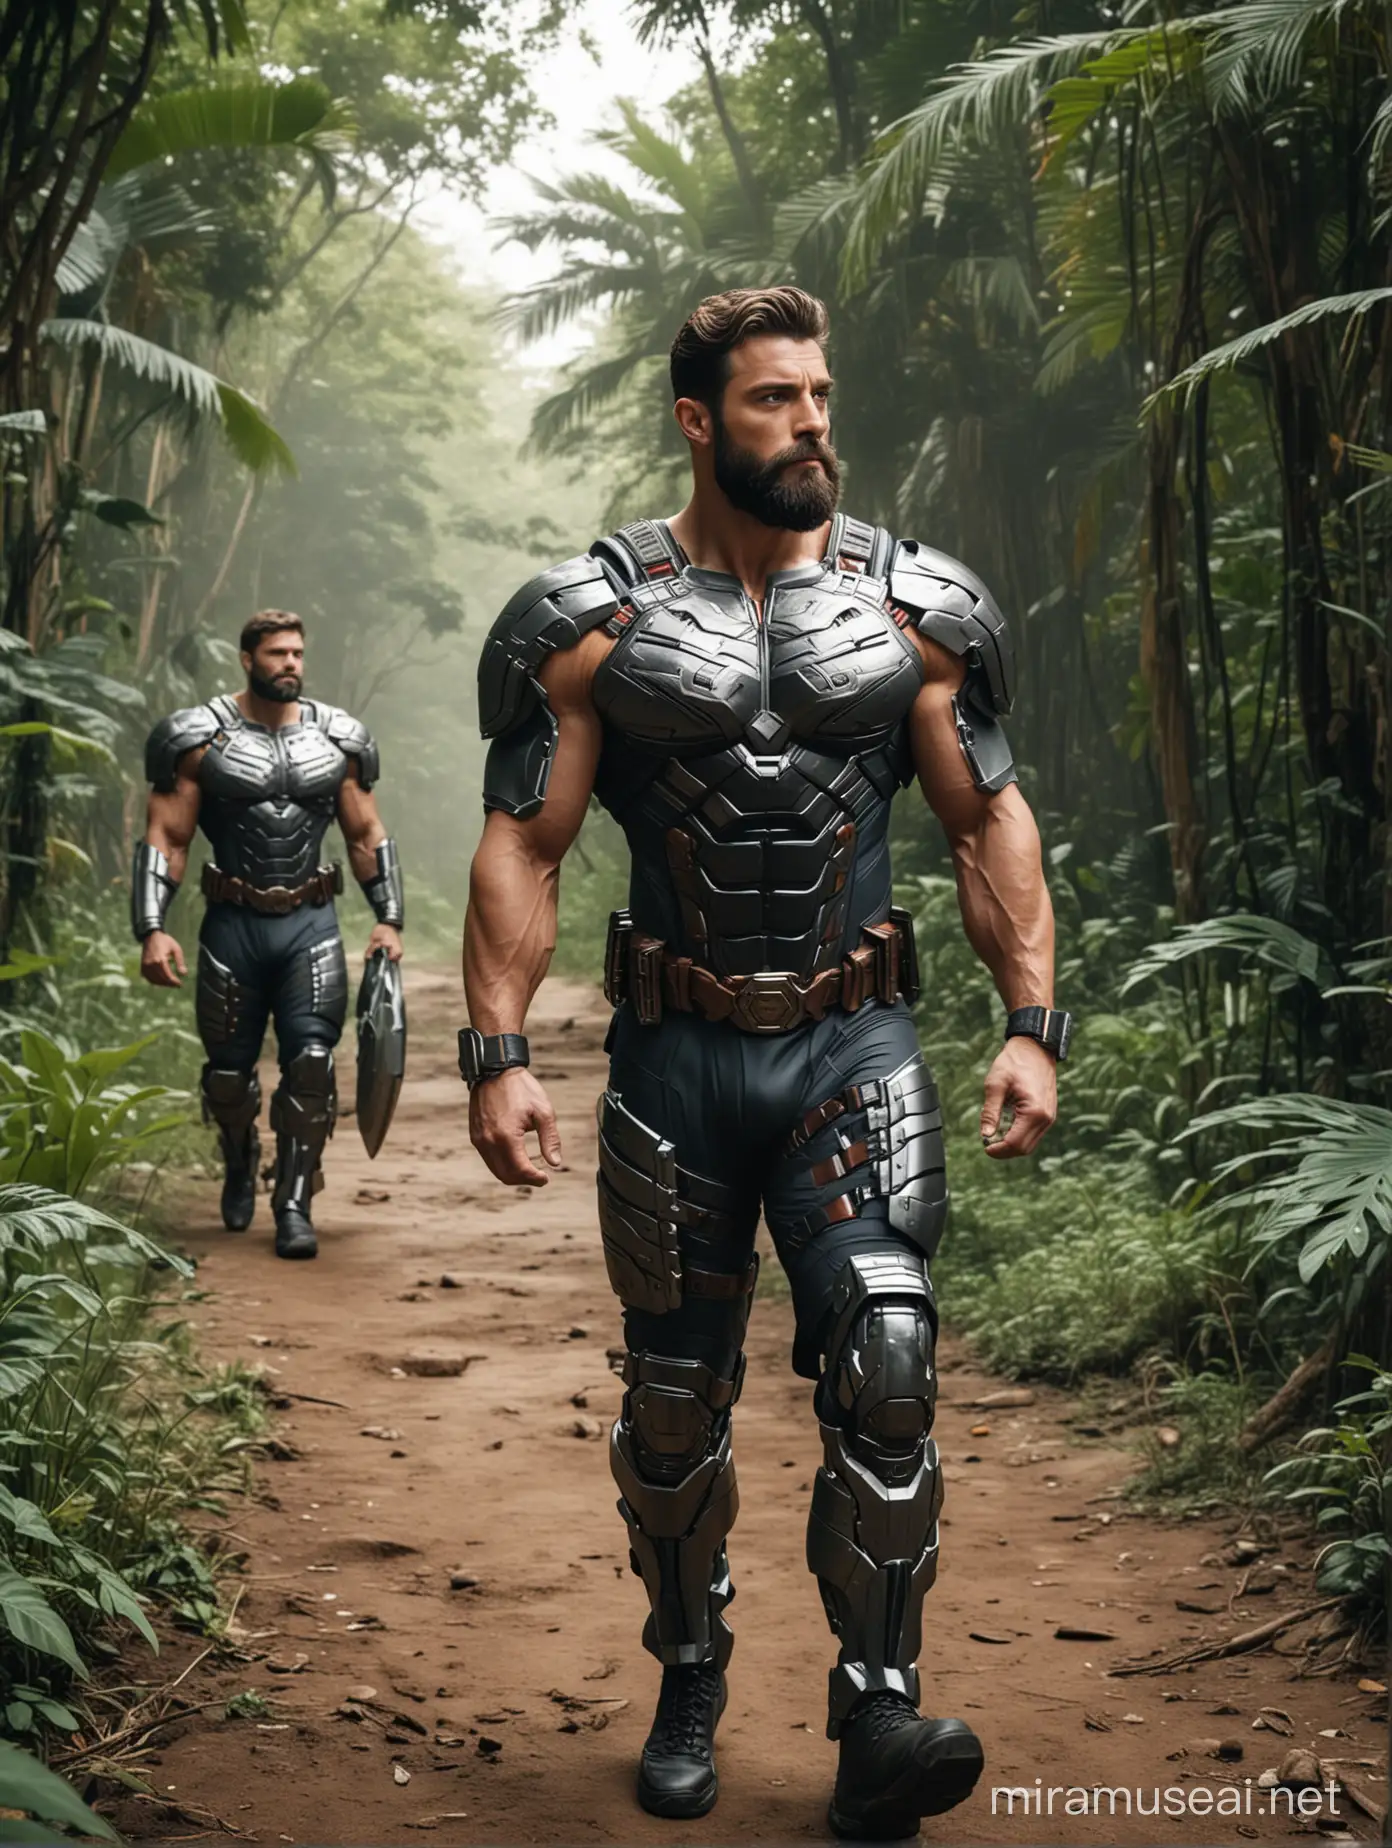 Majestic Supermen in HighTech Armor Trekking Through Lush Jungle